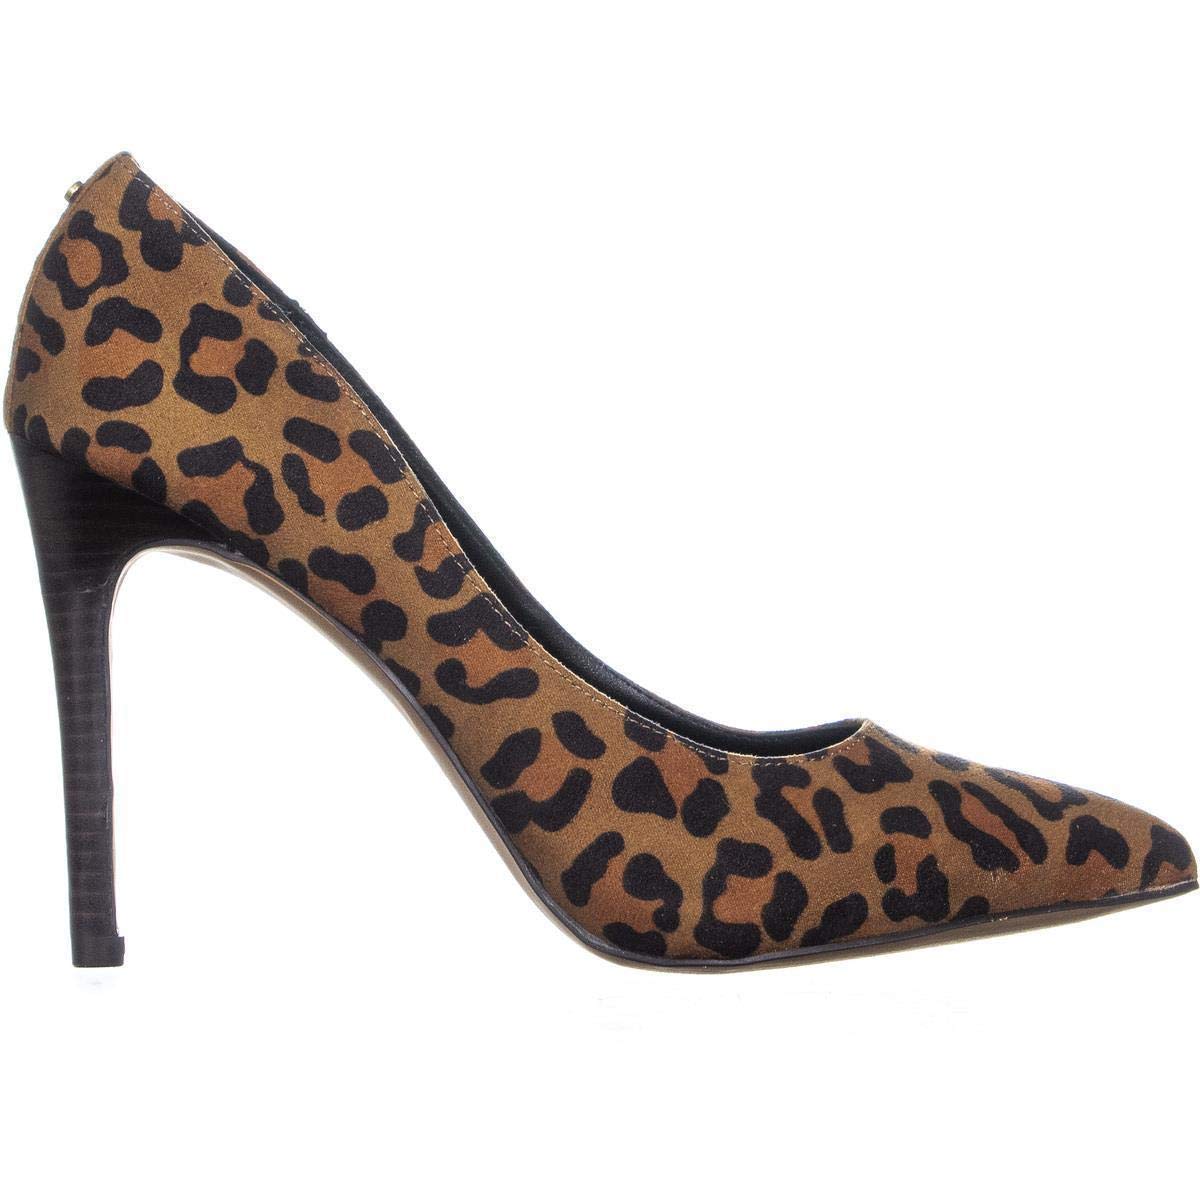 BCBGeneration Womens Heels & Pumps in Brown Color, Size 5.5 PKR | eBay